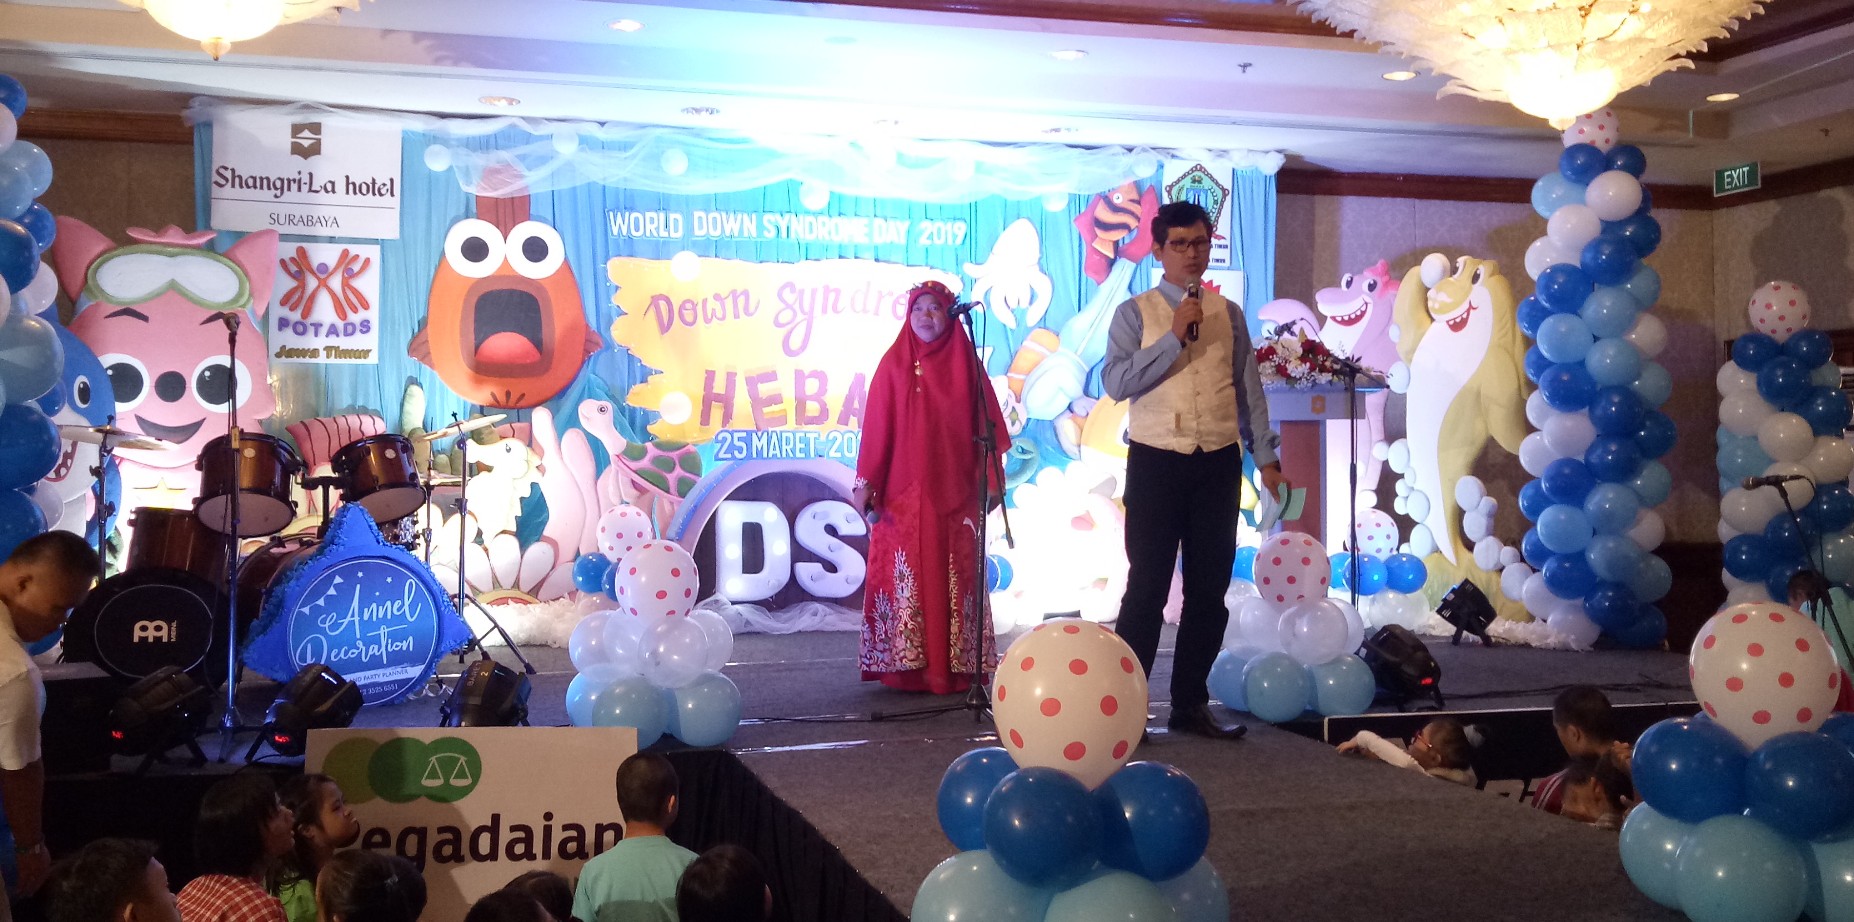 Pembukaan peringatan down syndrome dunia dengan tema 'Down Syndrome hebat' di Hotel Shangri-la Surabaya, Senin 25 Maret 2019. (Foto: Pita/ngopibareng.id)